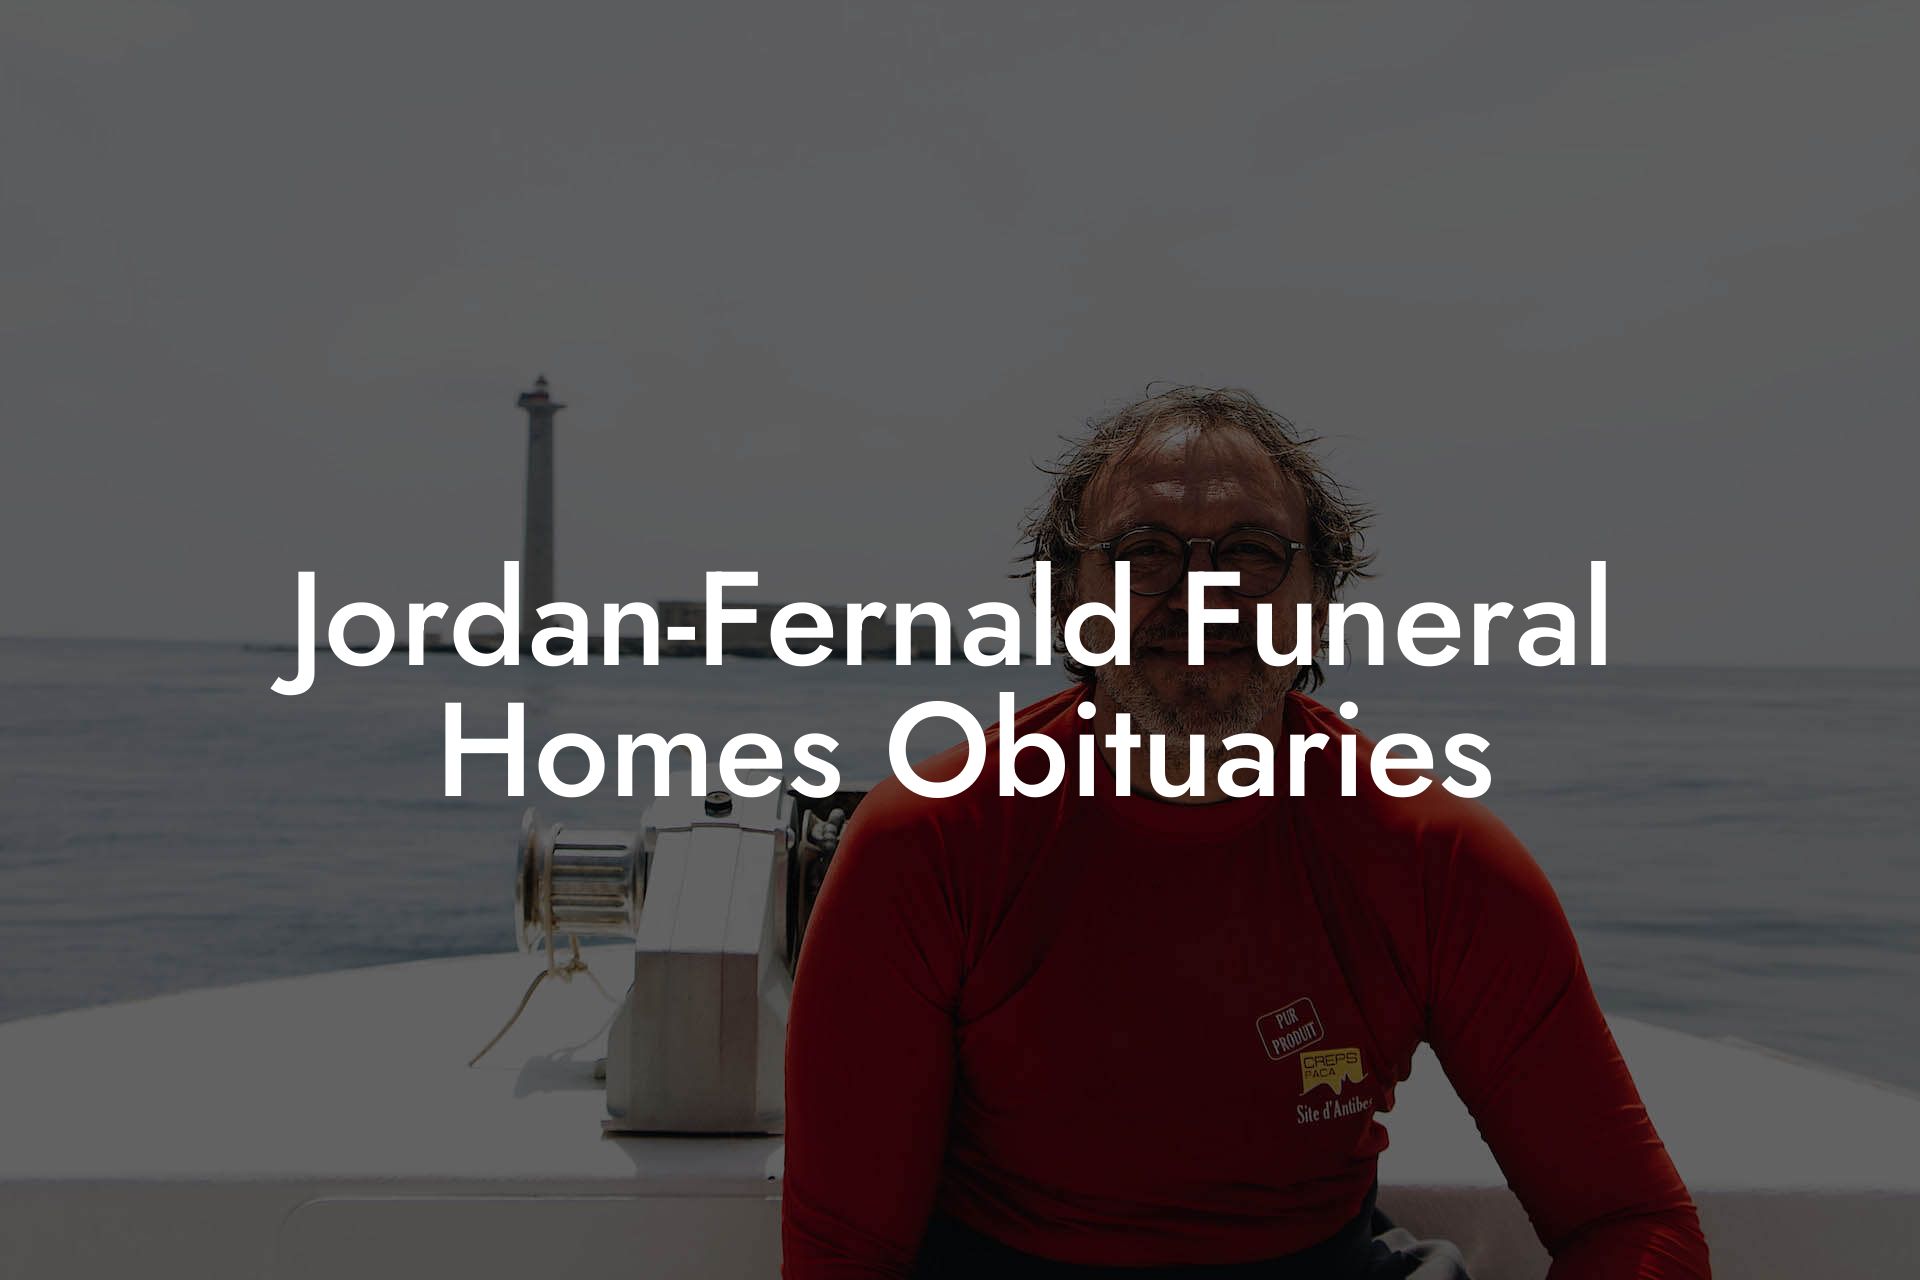 Jordan-Fernald Funeral Homes Obituaries